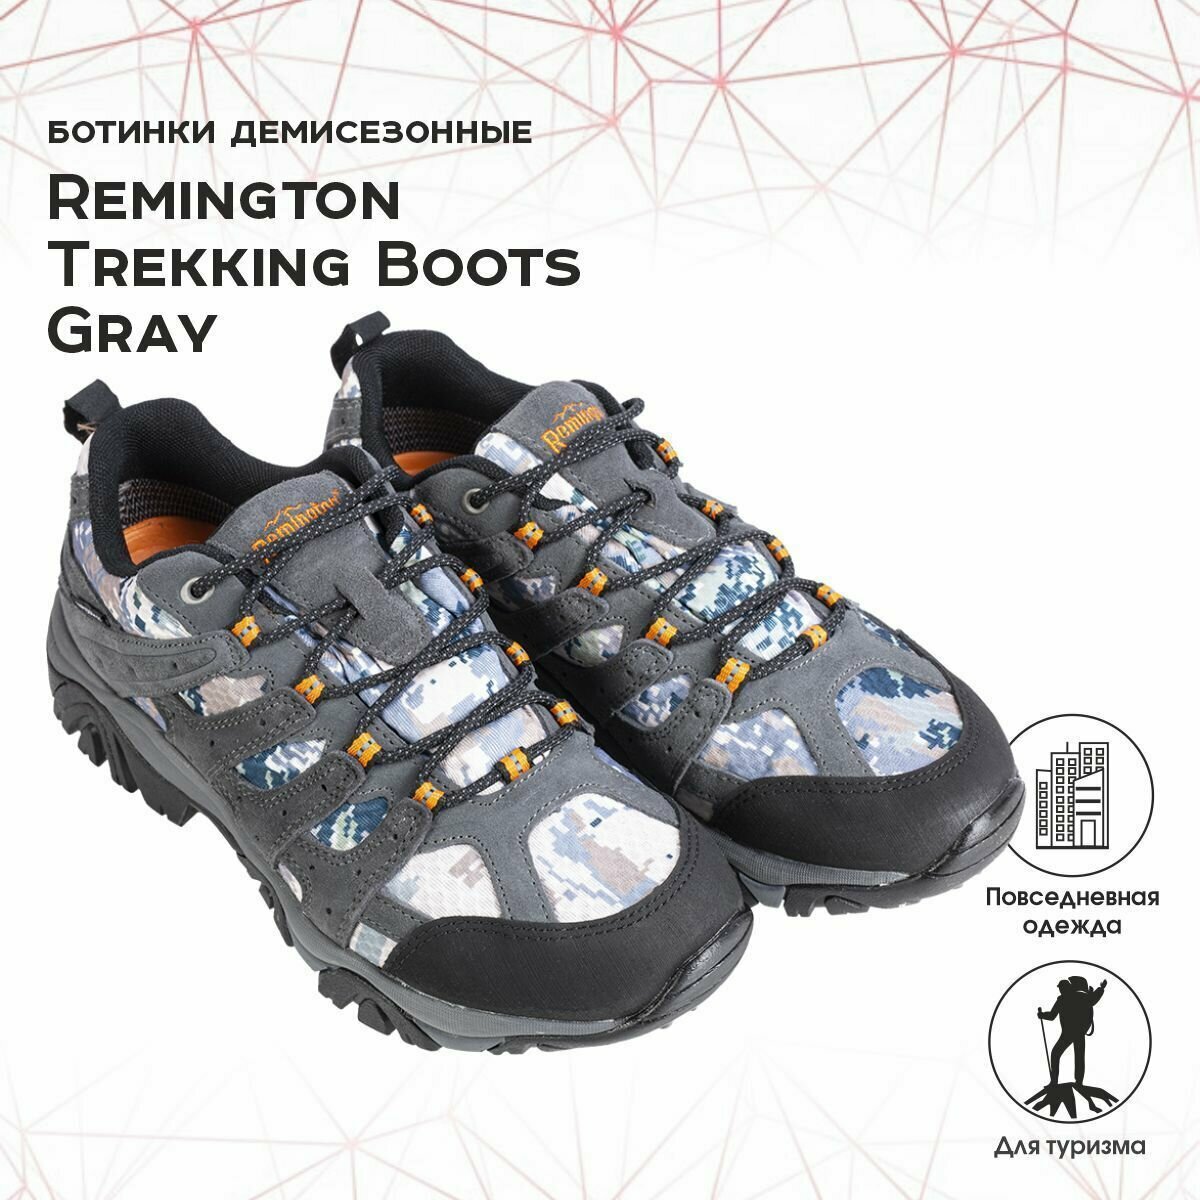 Ботинки Remington Trekking boots gray 46